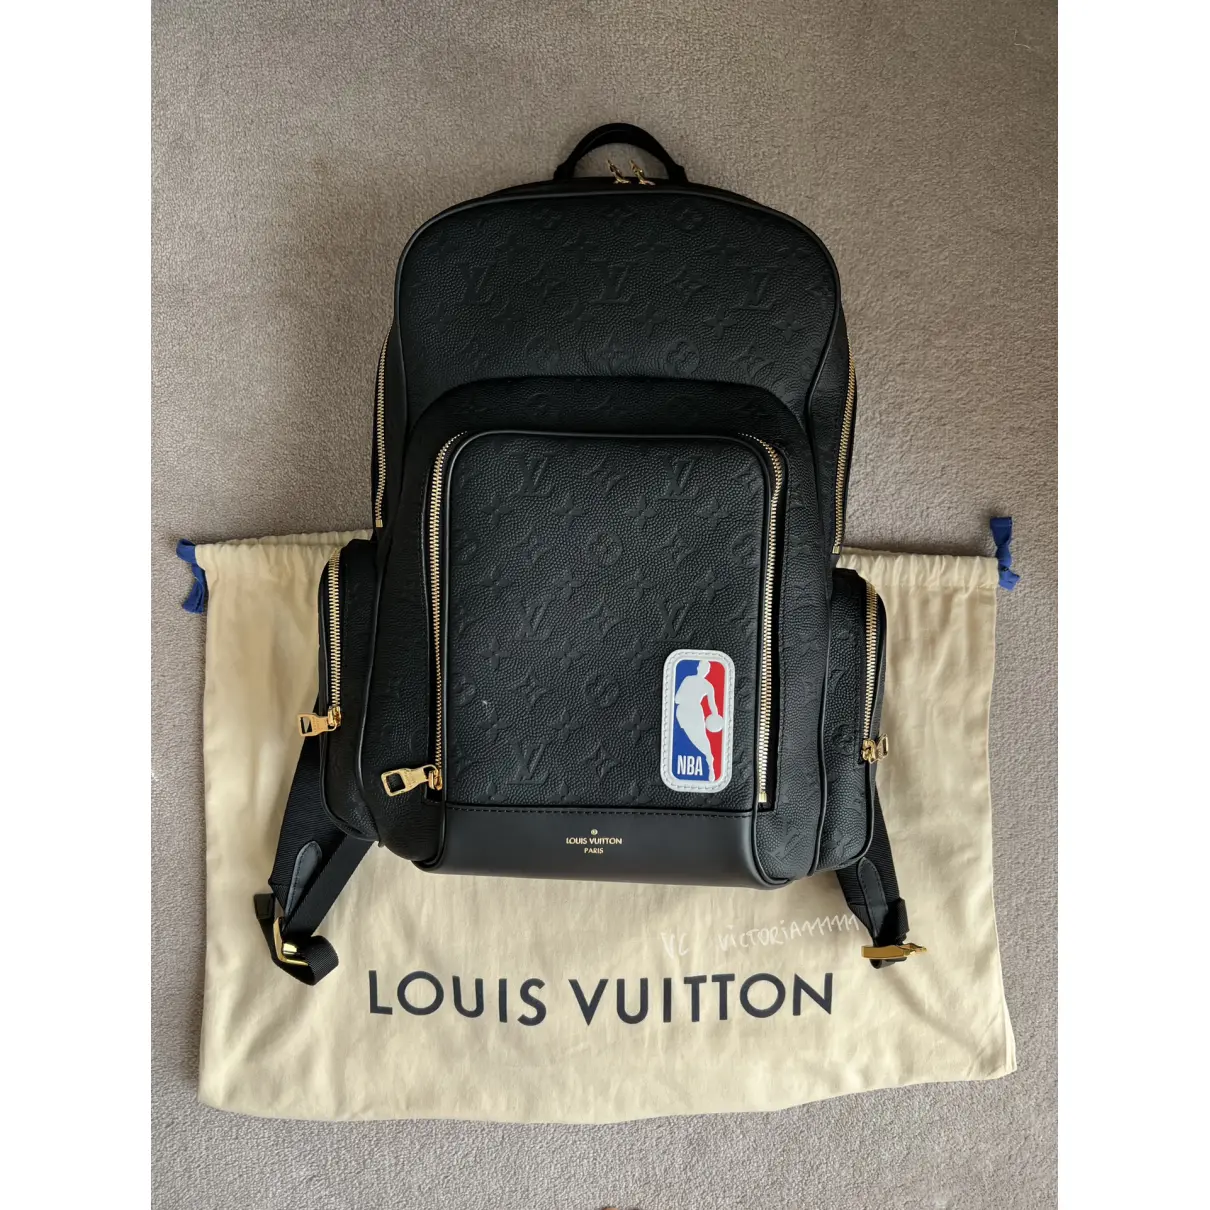 Buy Louis Vuitton X NBA Leather bag online